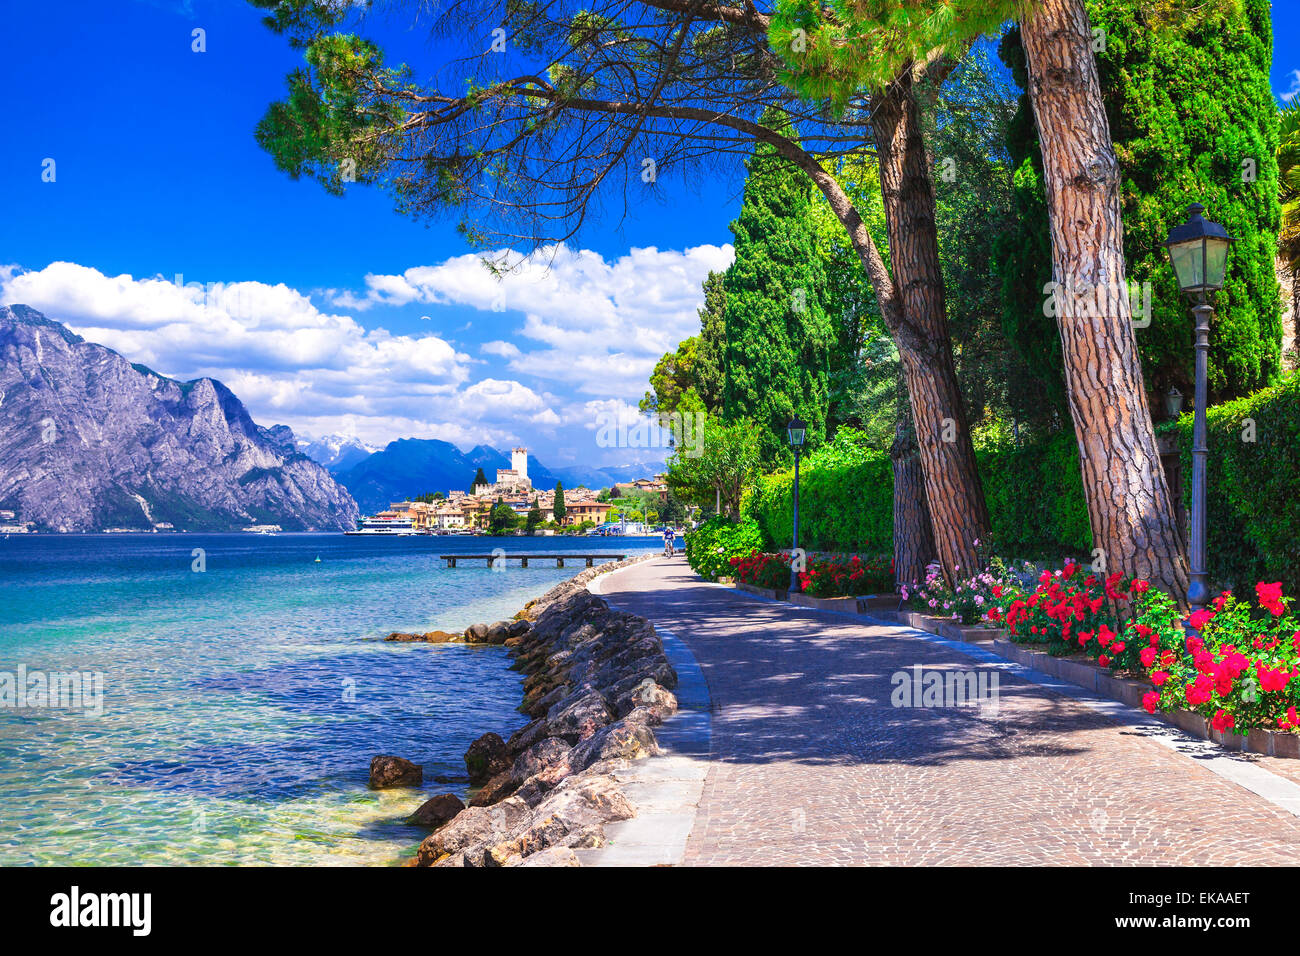 scenery of northen Italy - Malcesine on lago di Garda Stock Photo